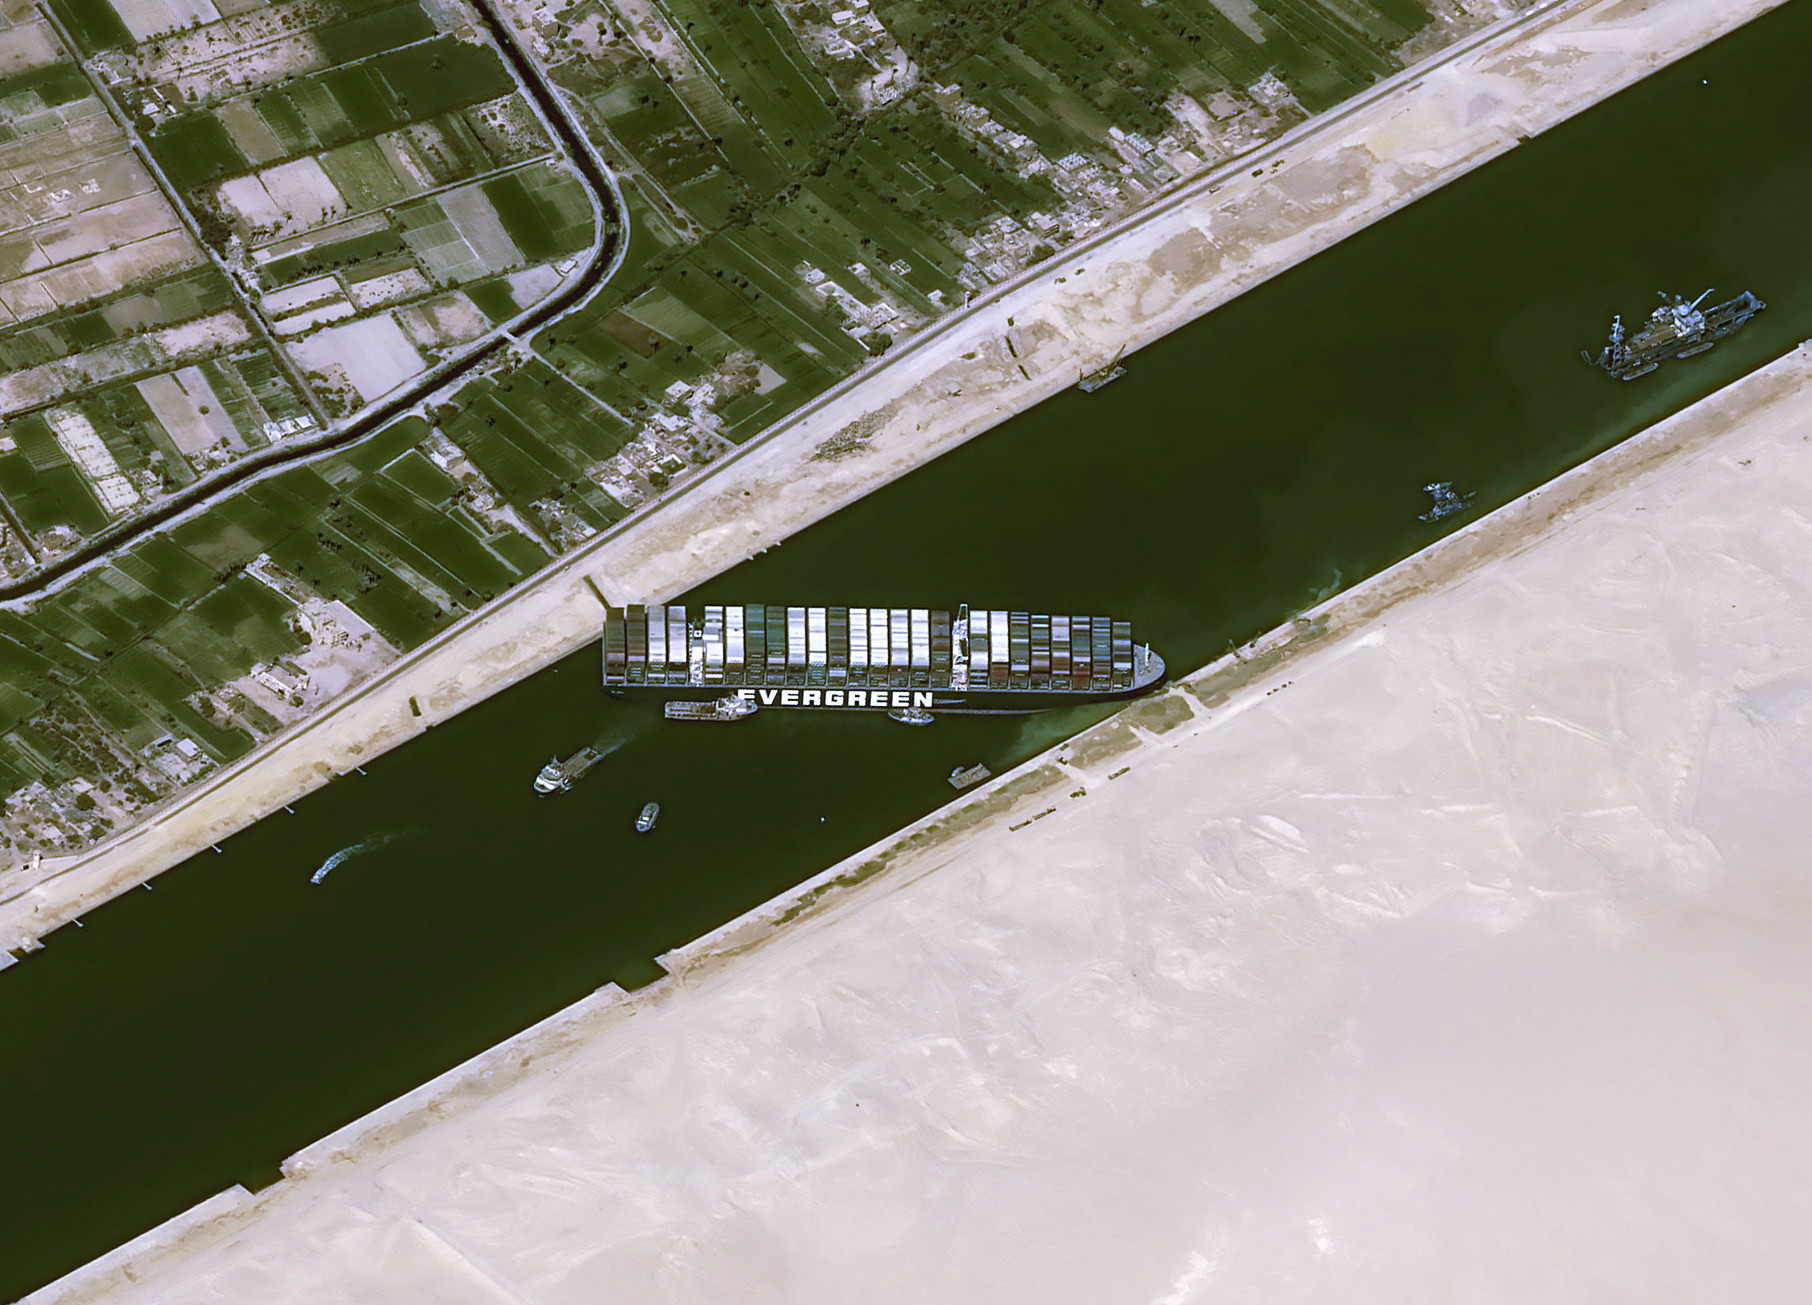 The suez canal blockage and Mega Ship Risks